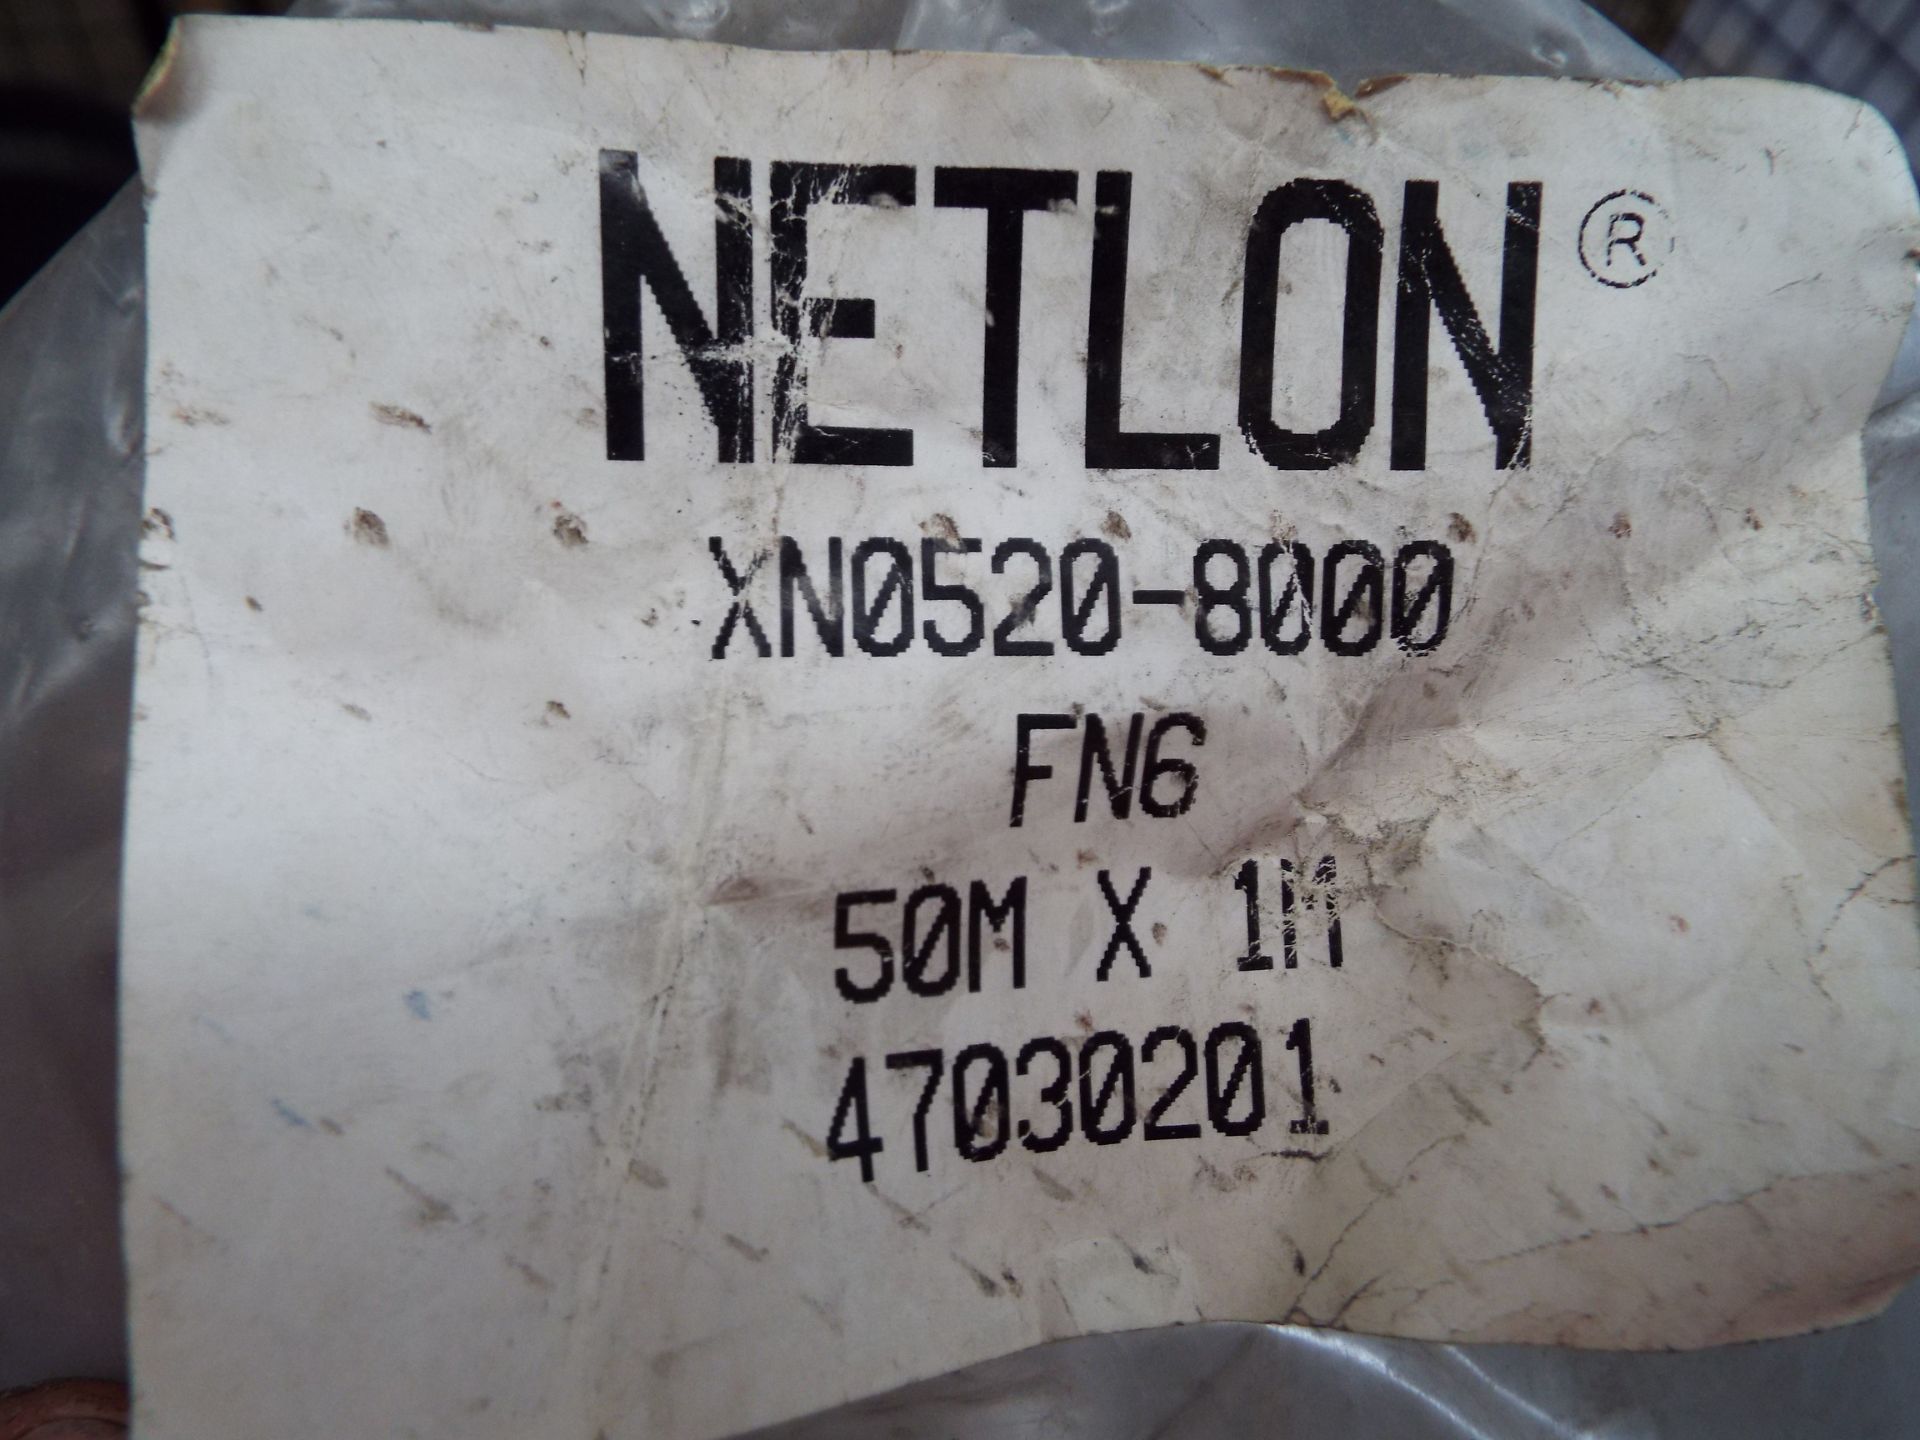 1m x 50m Roll of Netlon FN6 6mm Thermoplastic Netting P/No XN0520 - 8000 - Bild 3 aus 5